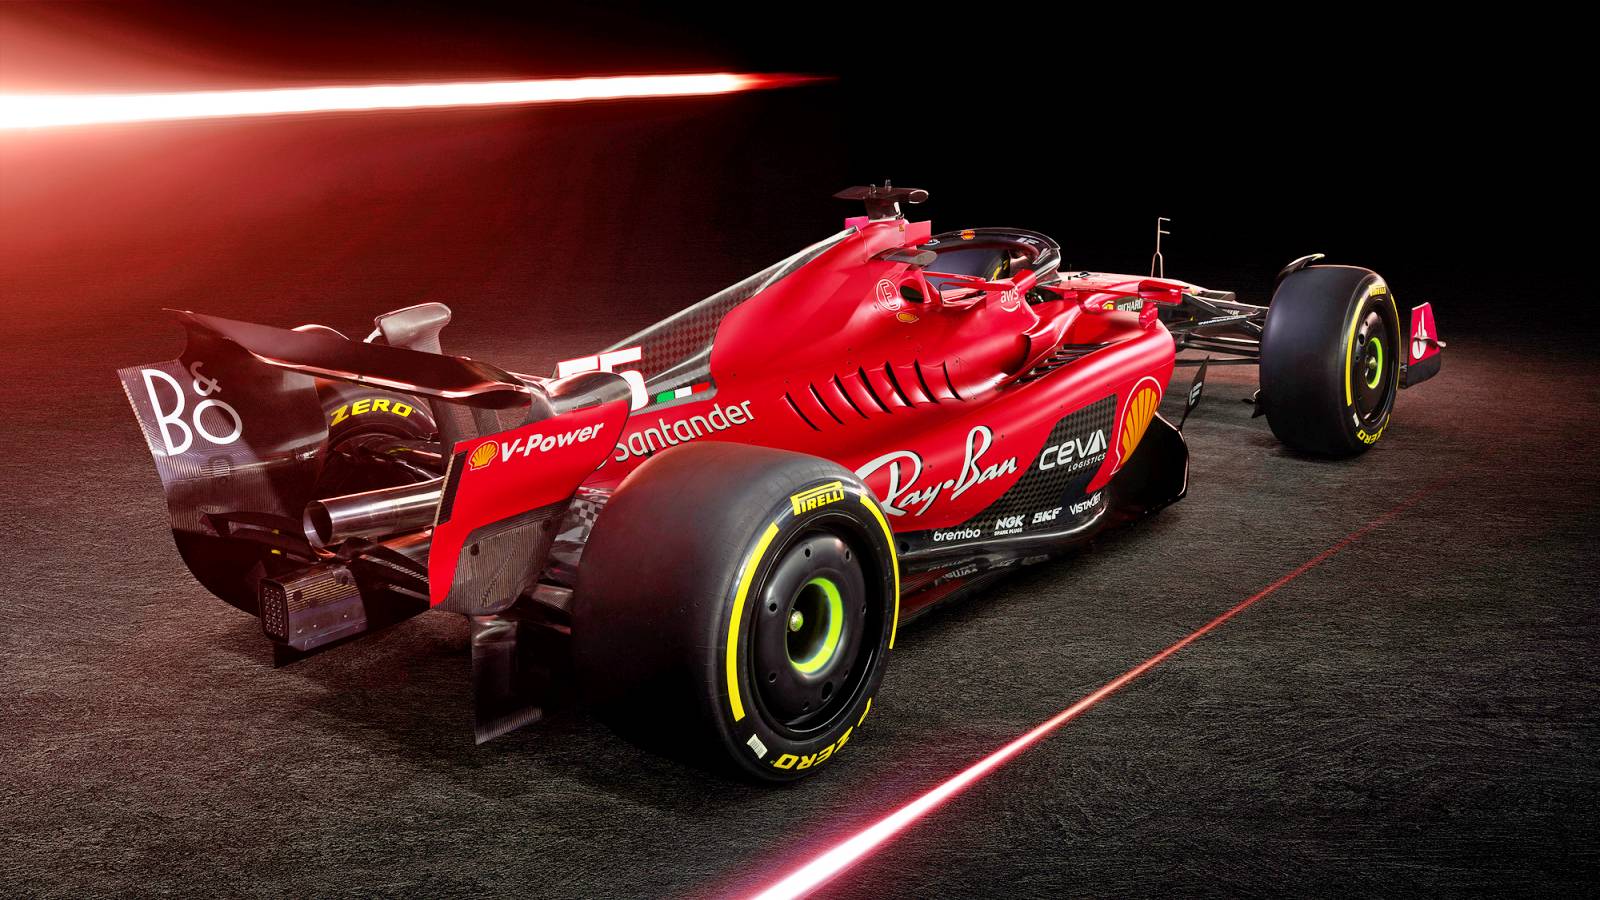 Bang & Olufsen underskriver et partnerskab med Scuderia Ferrari for 2023 Formel 1-sæsonen